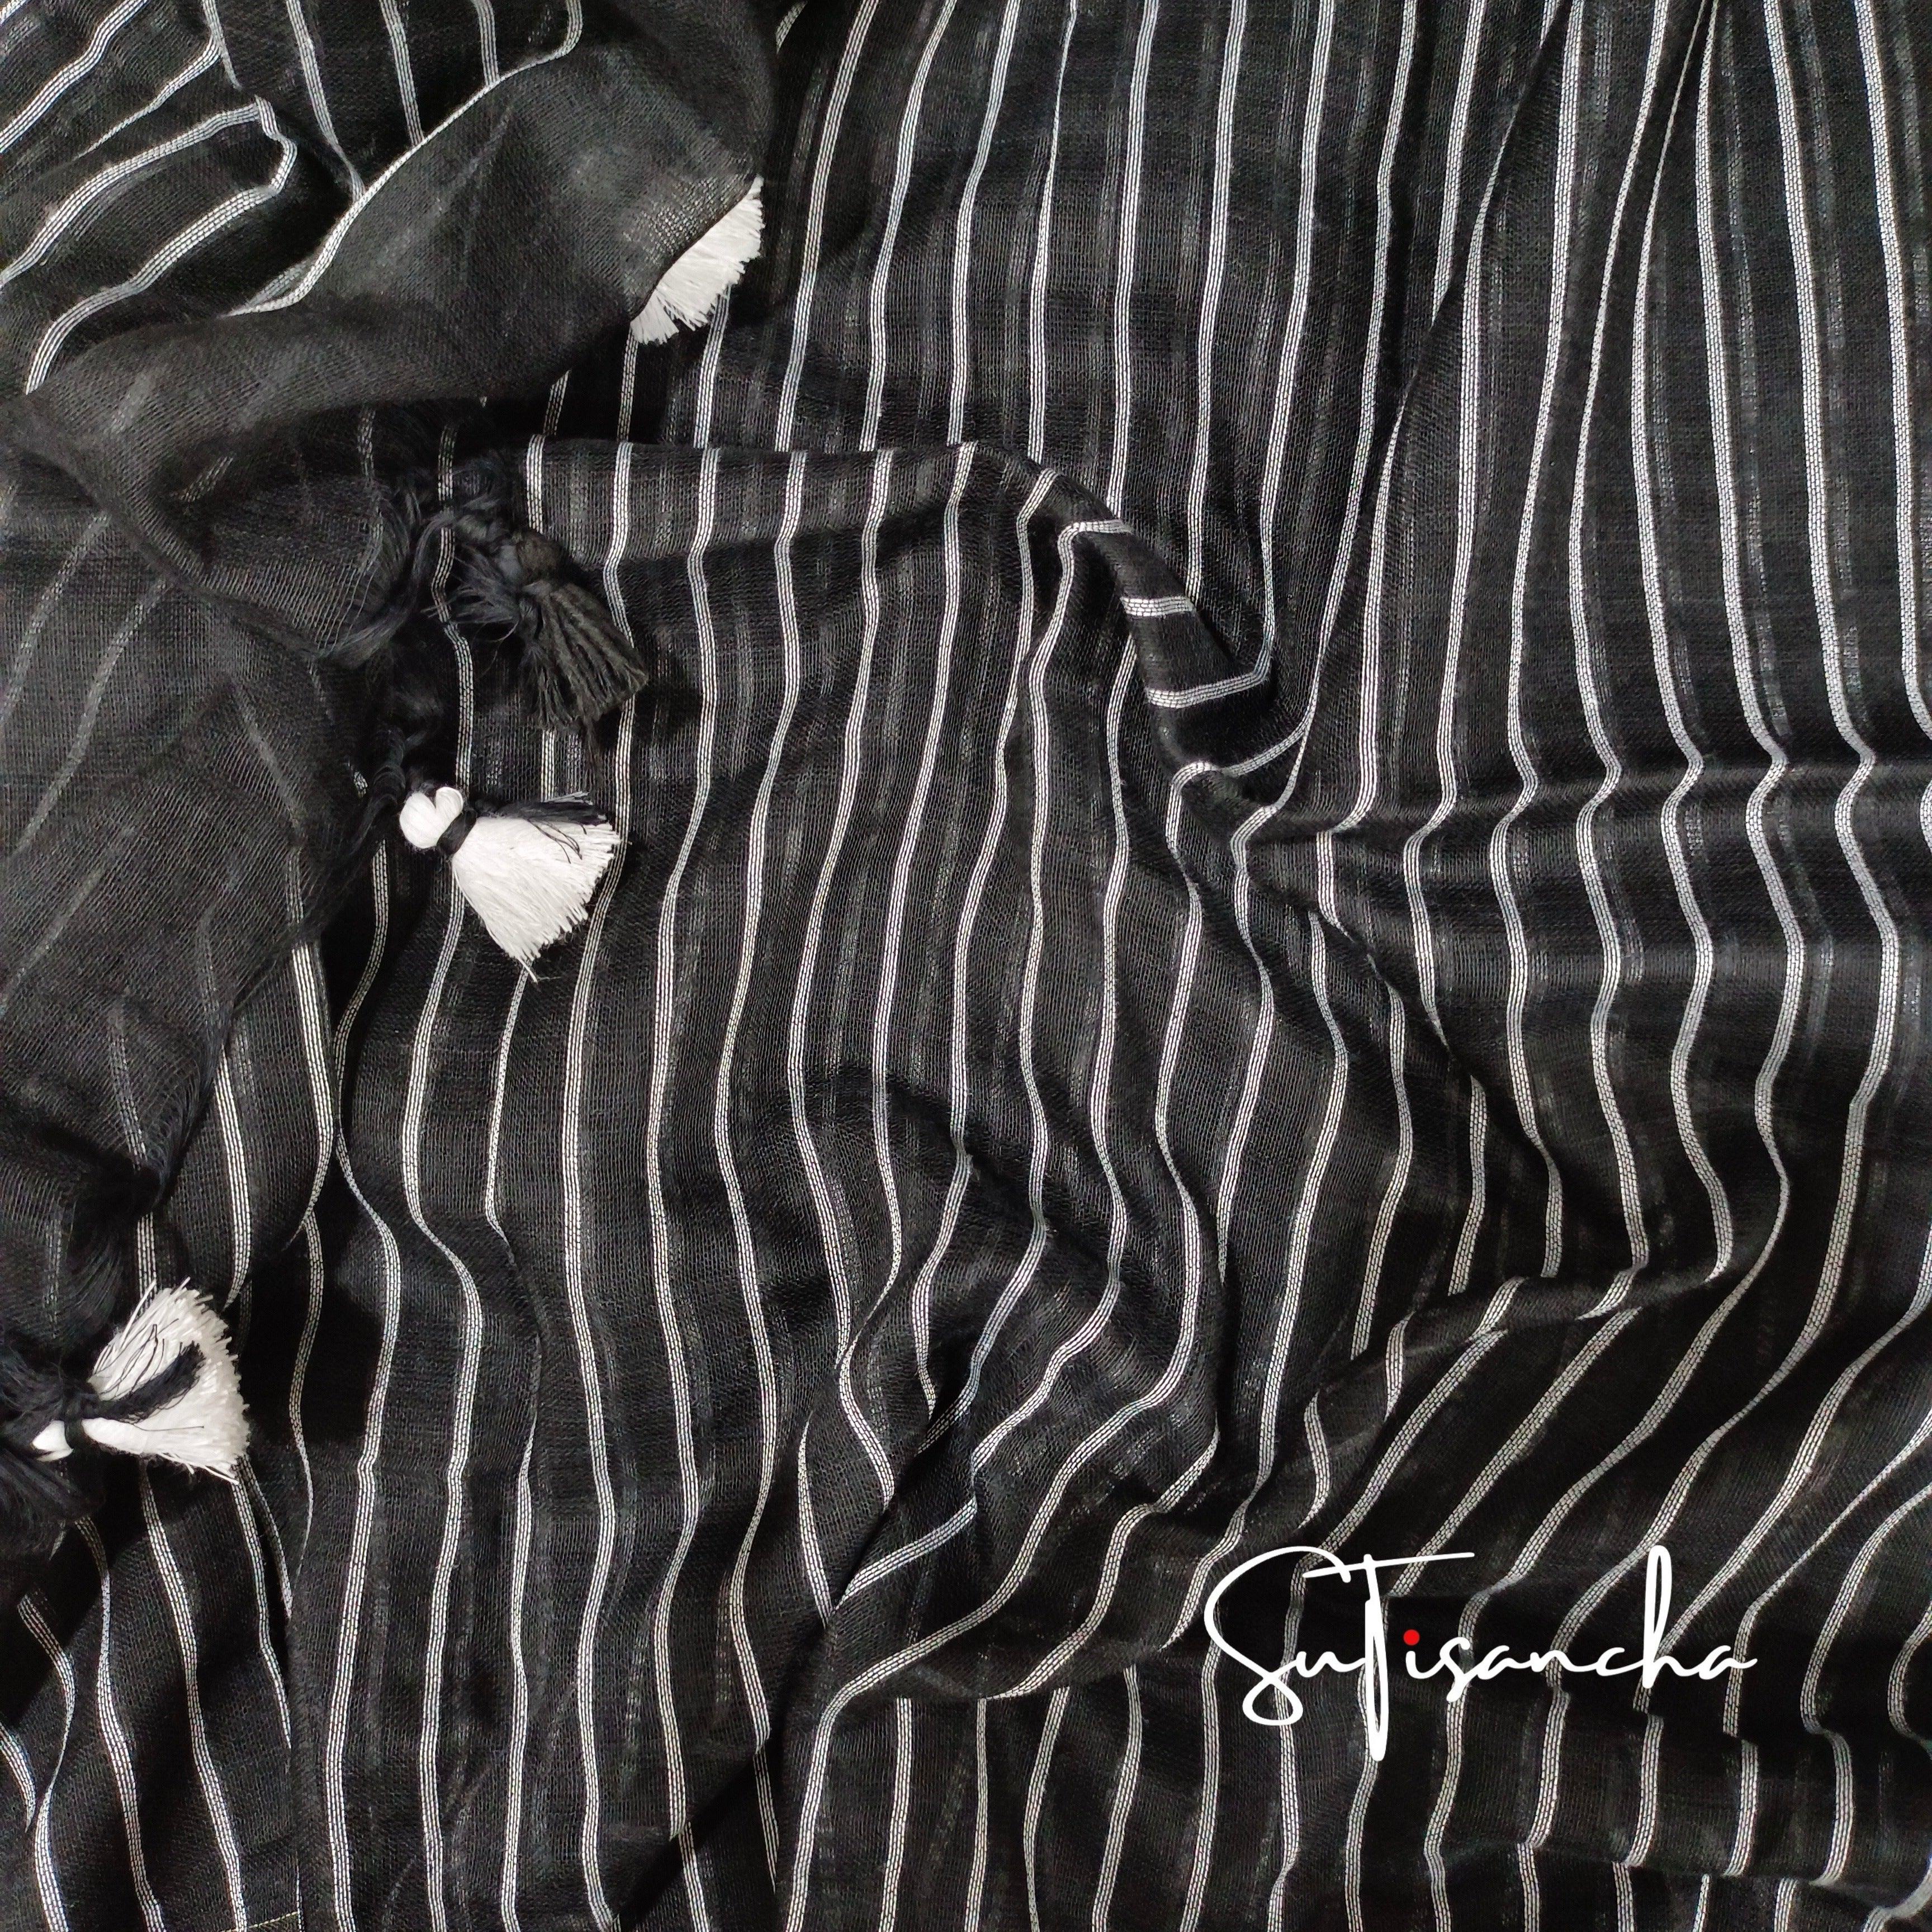 Sutisancha Black Stripe with PomPom Khadi Cotton Saree - Suti Sancha